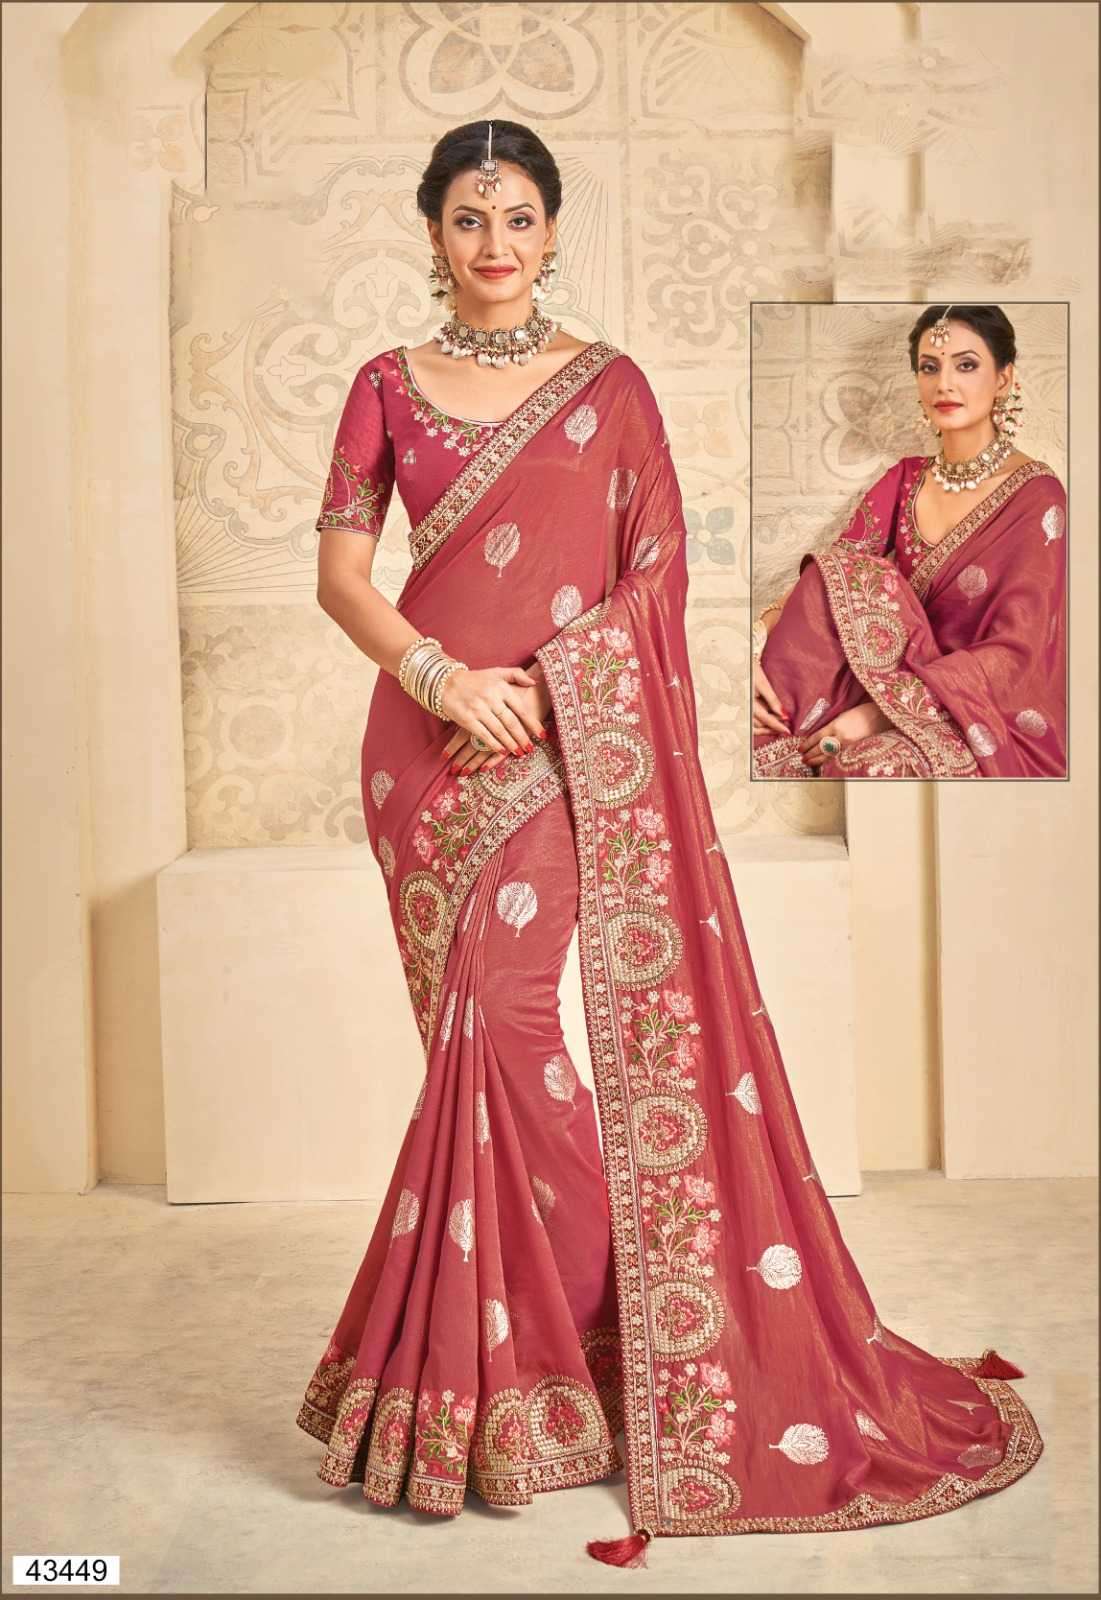 mahotsav helisha norita 43400 series khadi silk saree